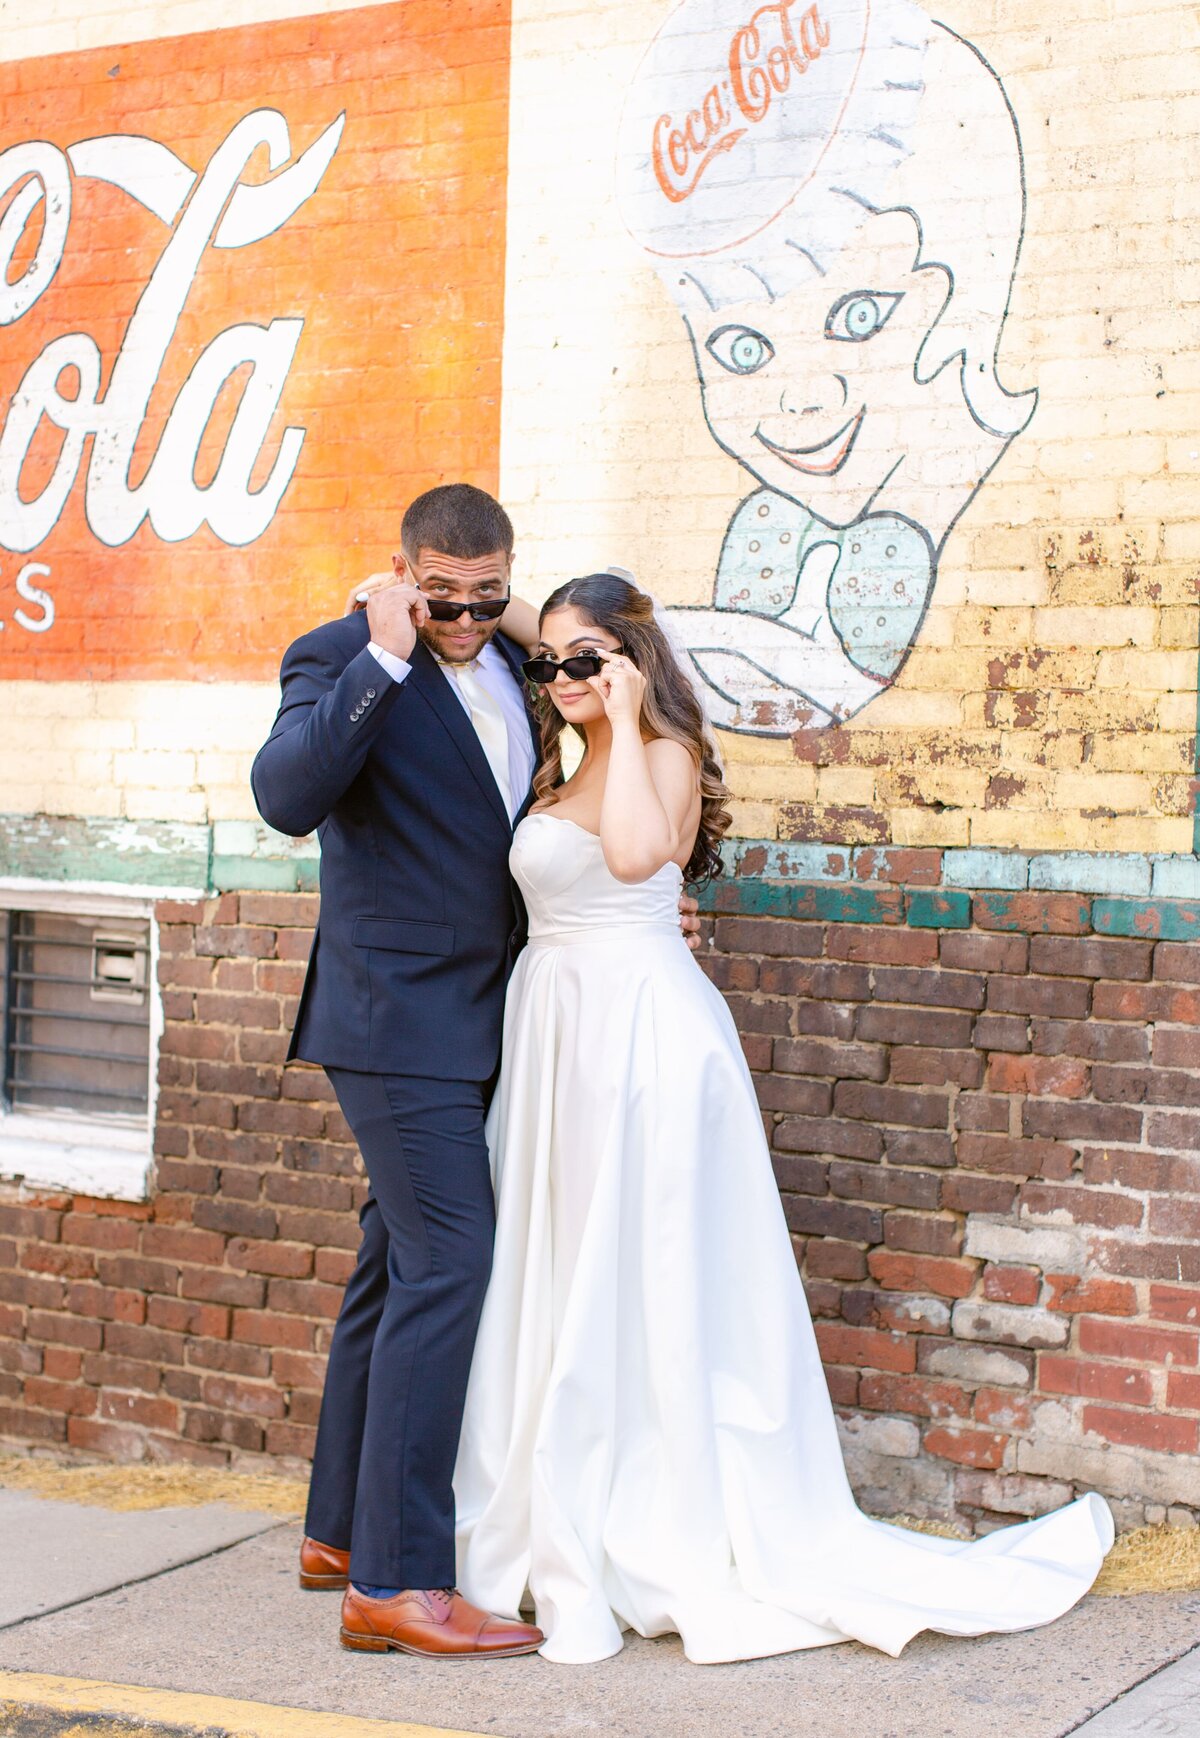 Bride and groom peeking through sunglasses in front of a brick wall in Culpeper, Virginia.